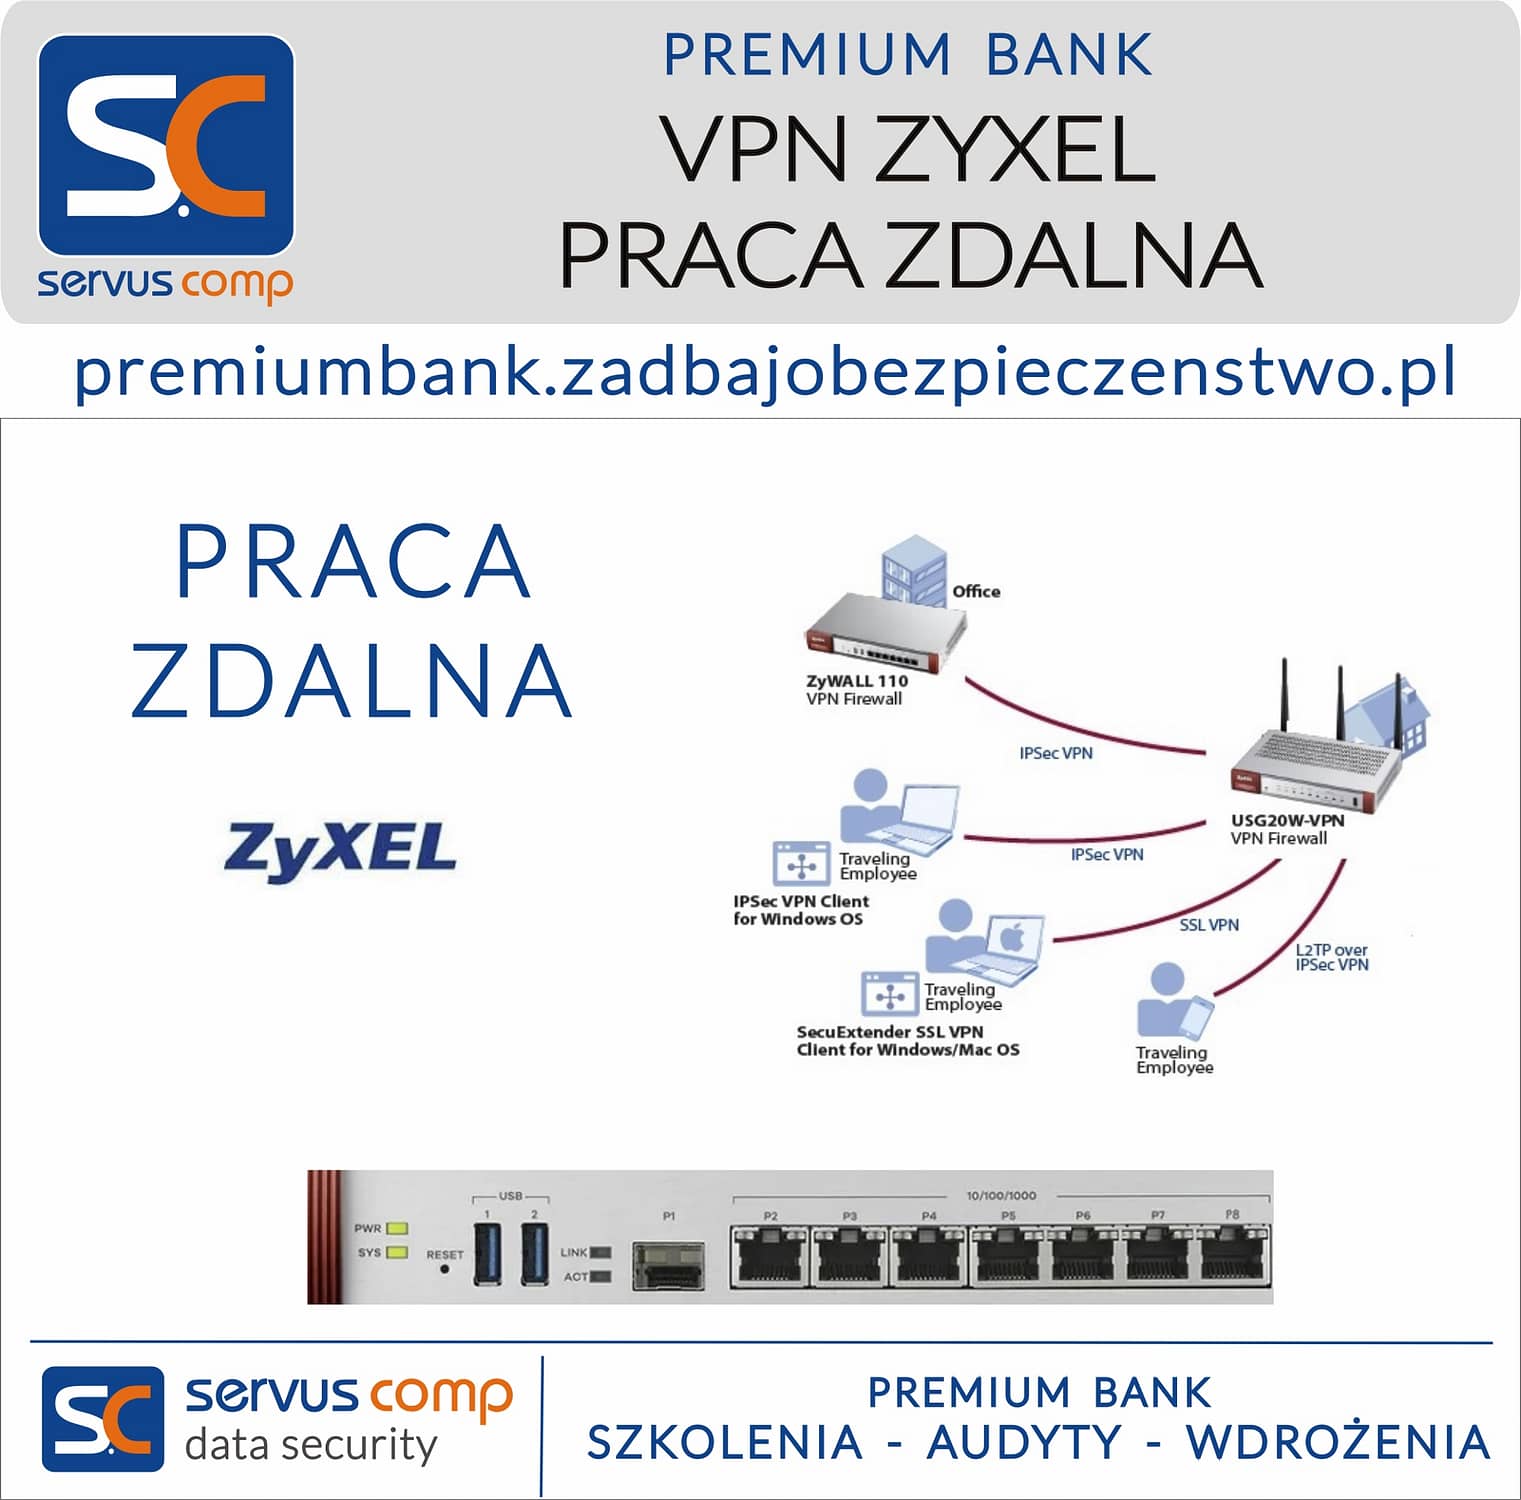 PCD - VPN ZYXEL PRACA ZDALNA Servus Comp